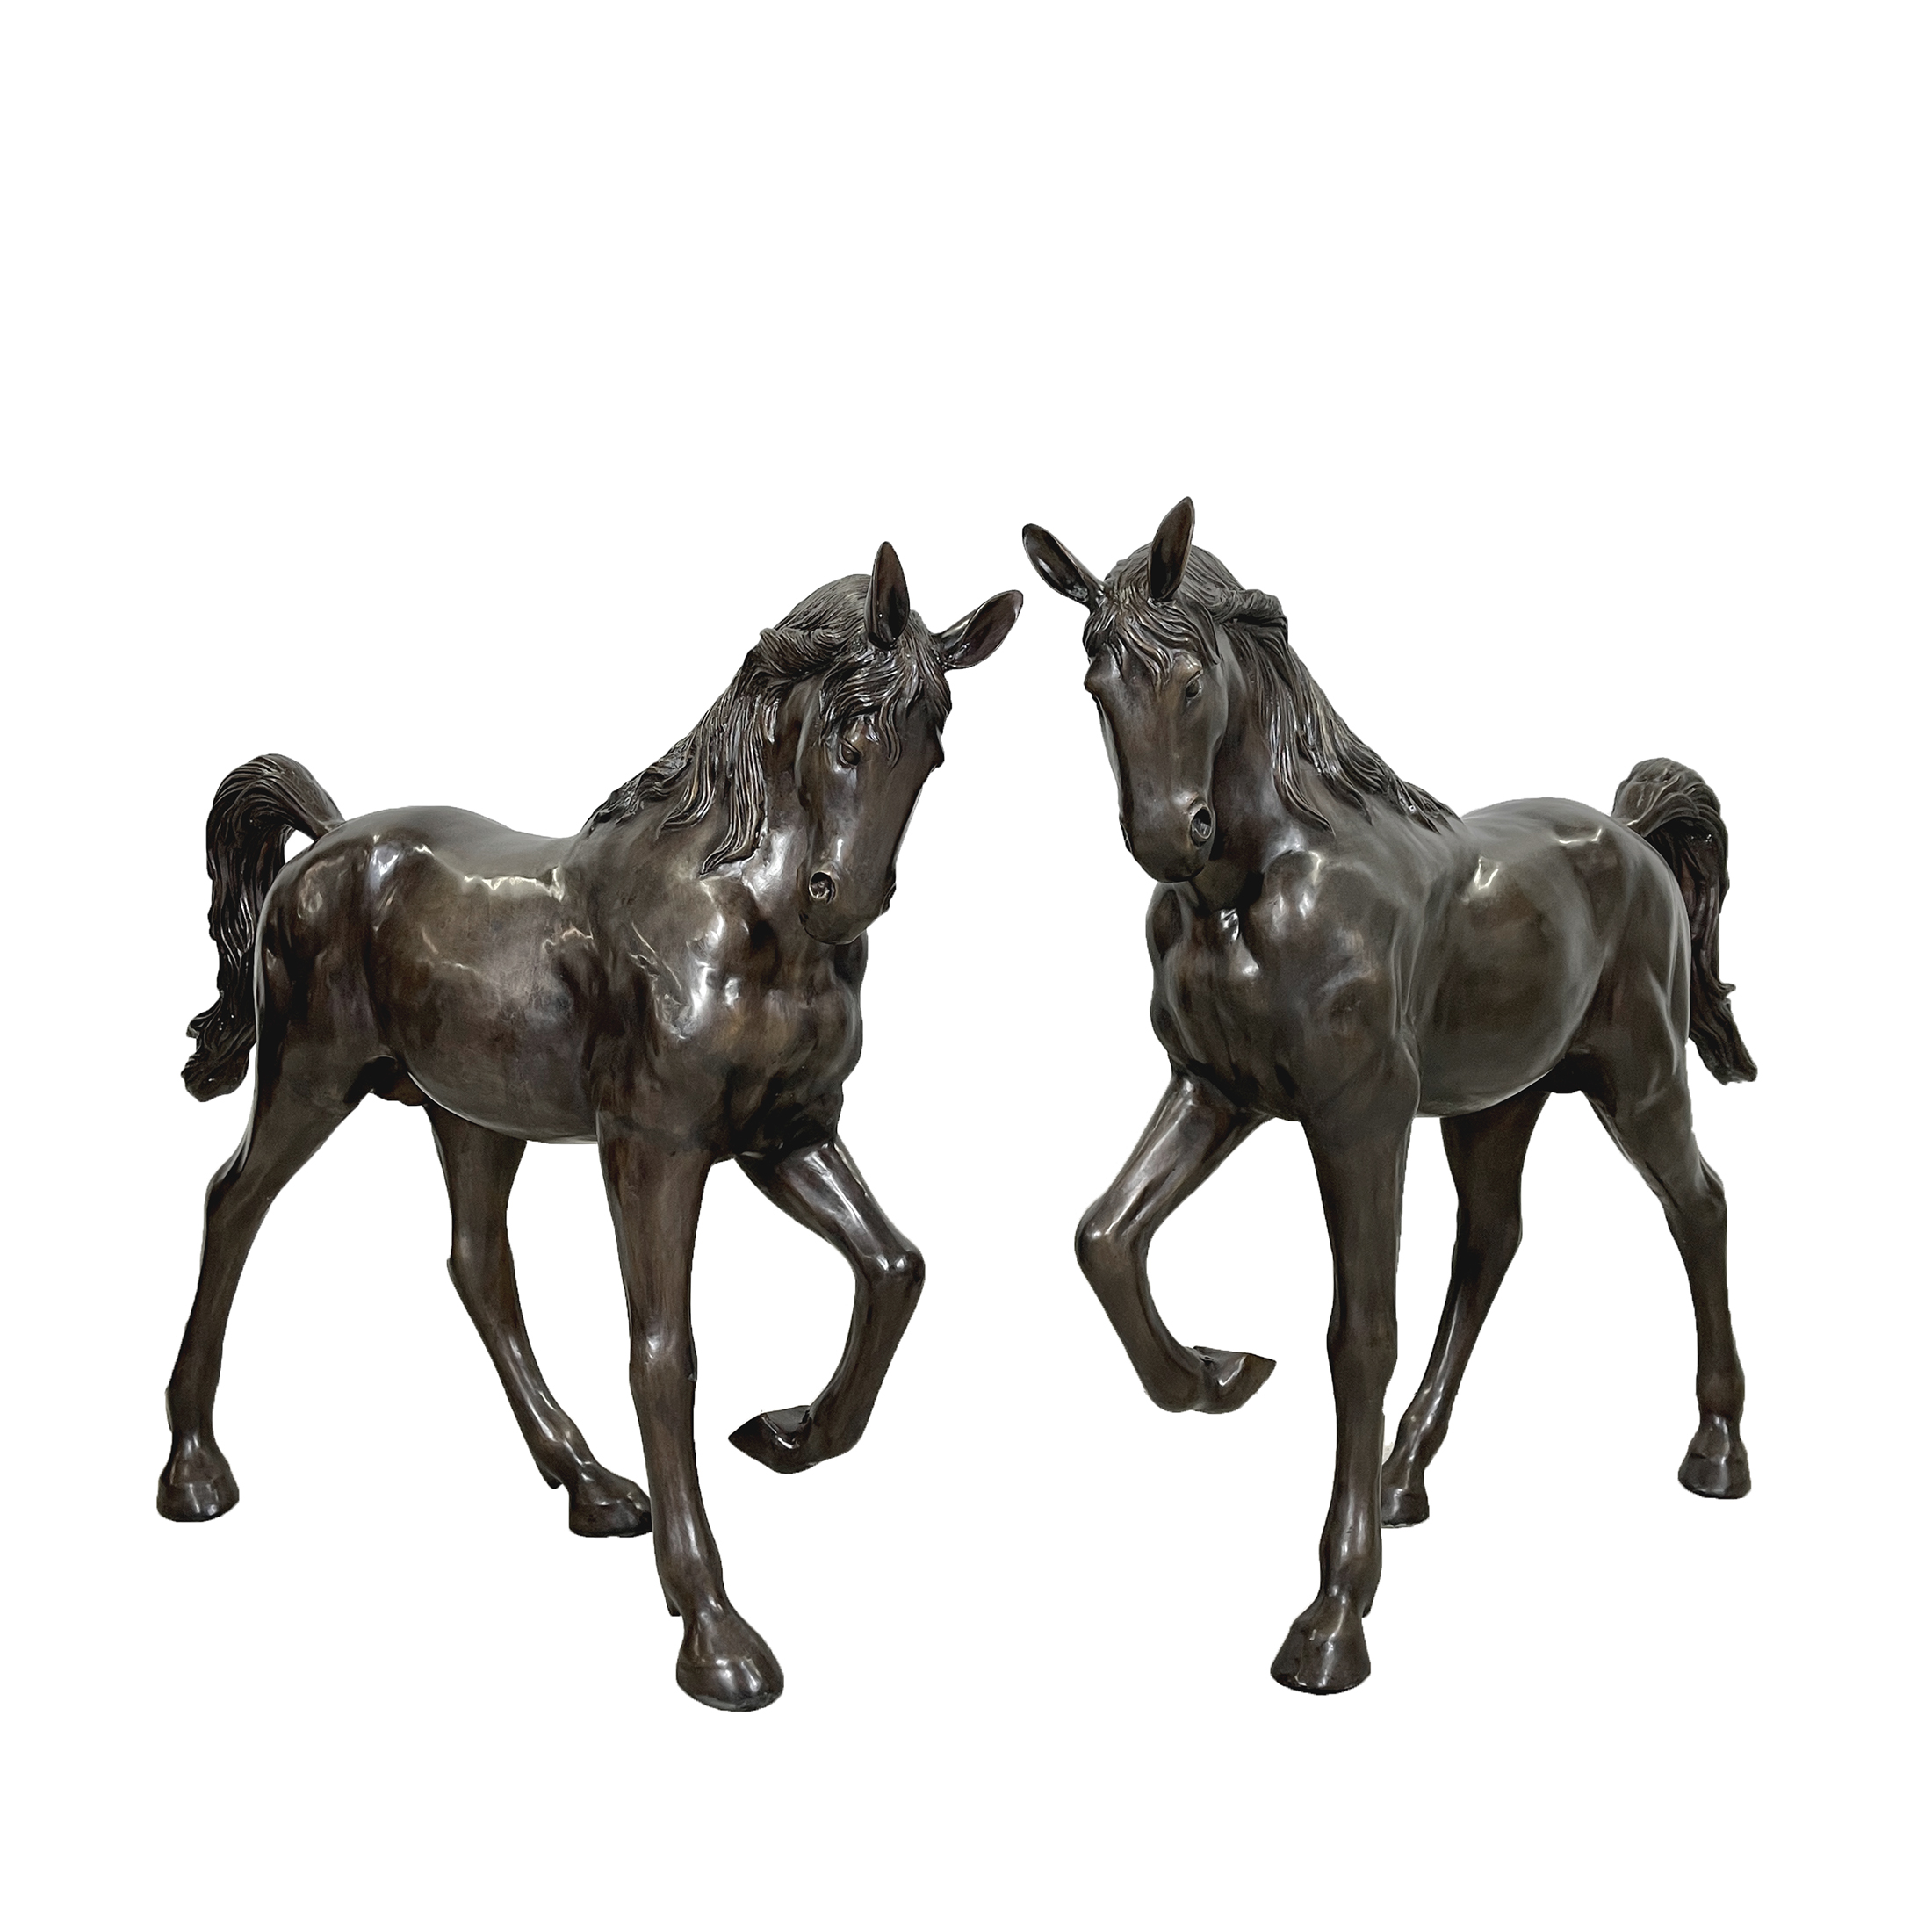 SRB703232 Bronze Small Trotting Horse Sculpture Pair by Metropolitan Galleries Inc.